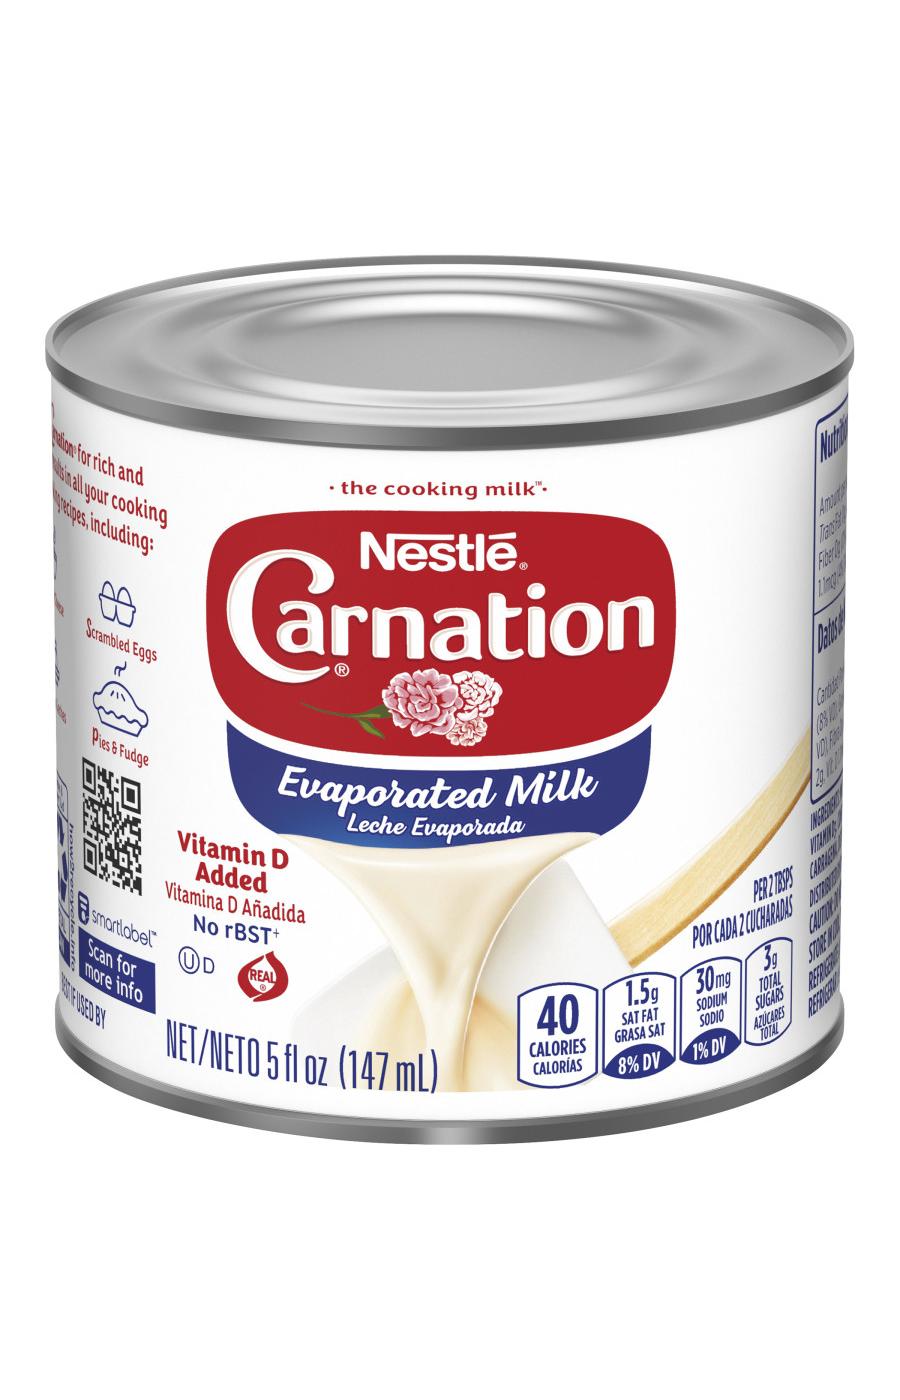 Carnation Evaporated Milk; image 1 of 4